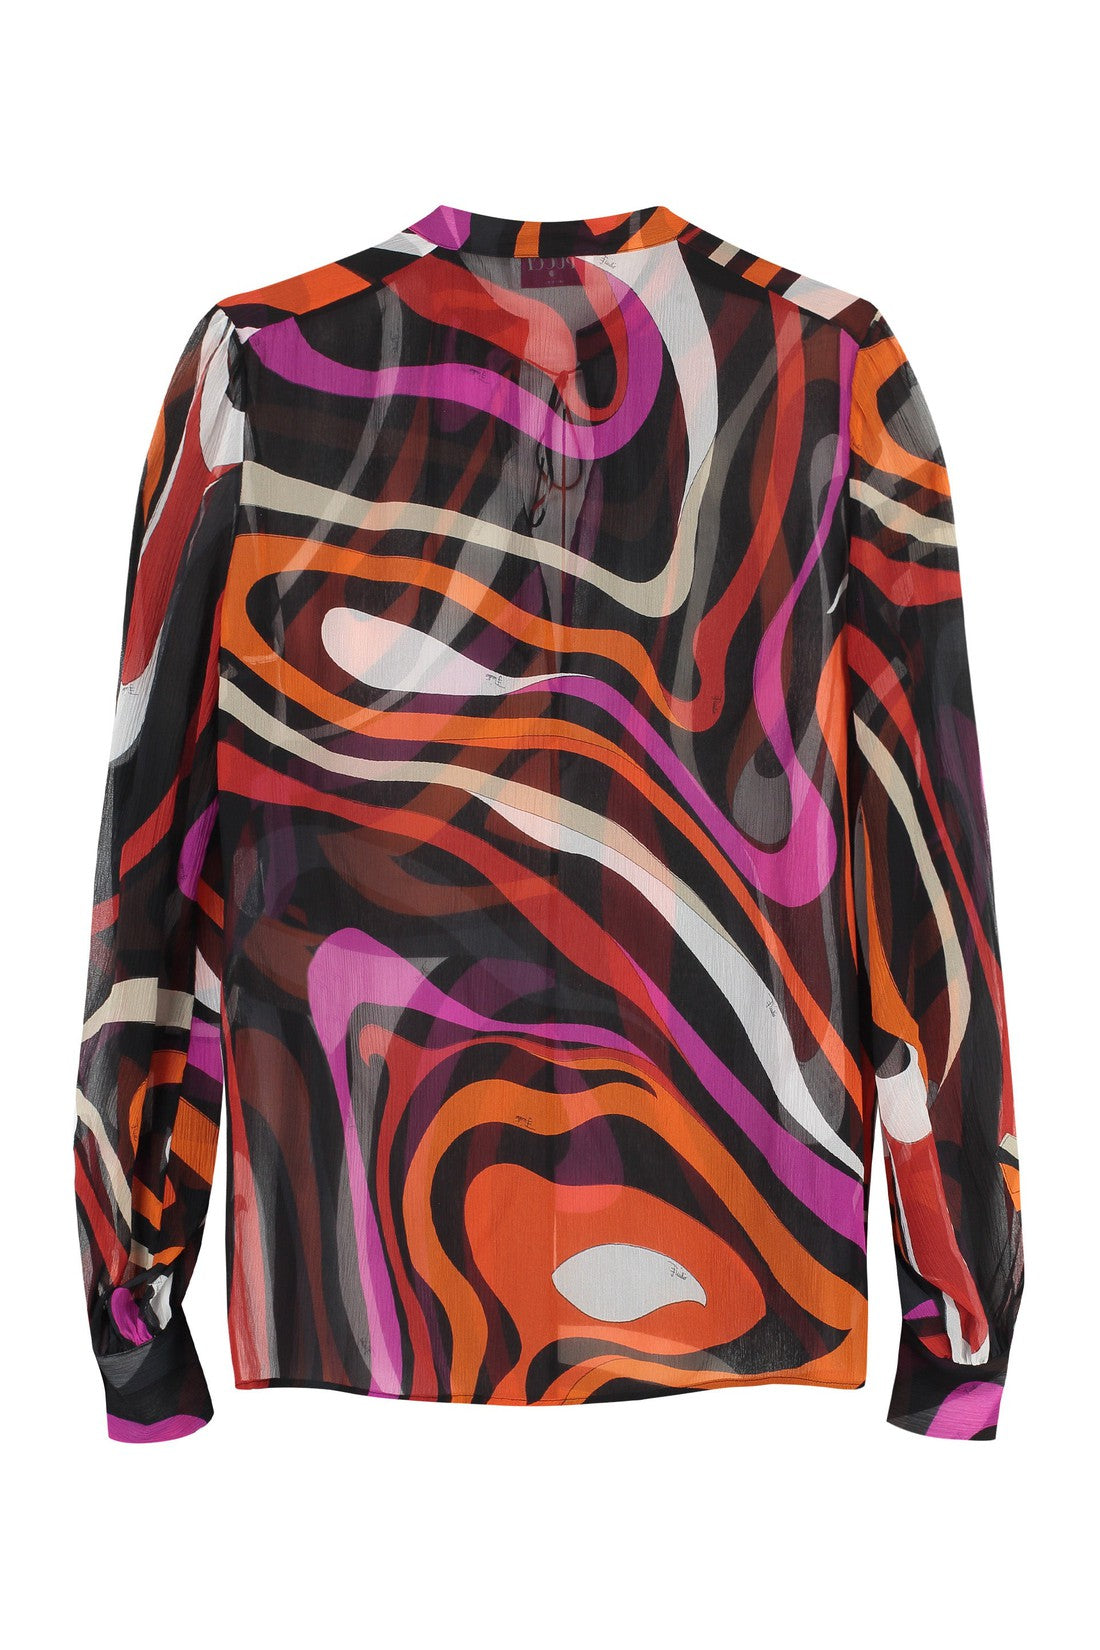 PUCCI-OUTLET-SALE-Printed silk blouse-ARCHIVIST